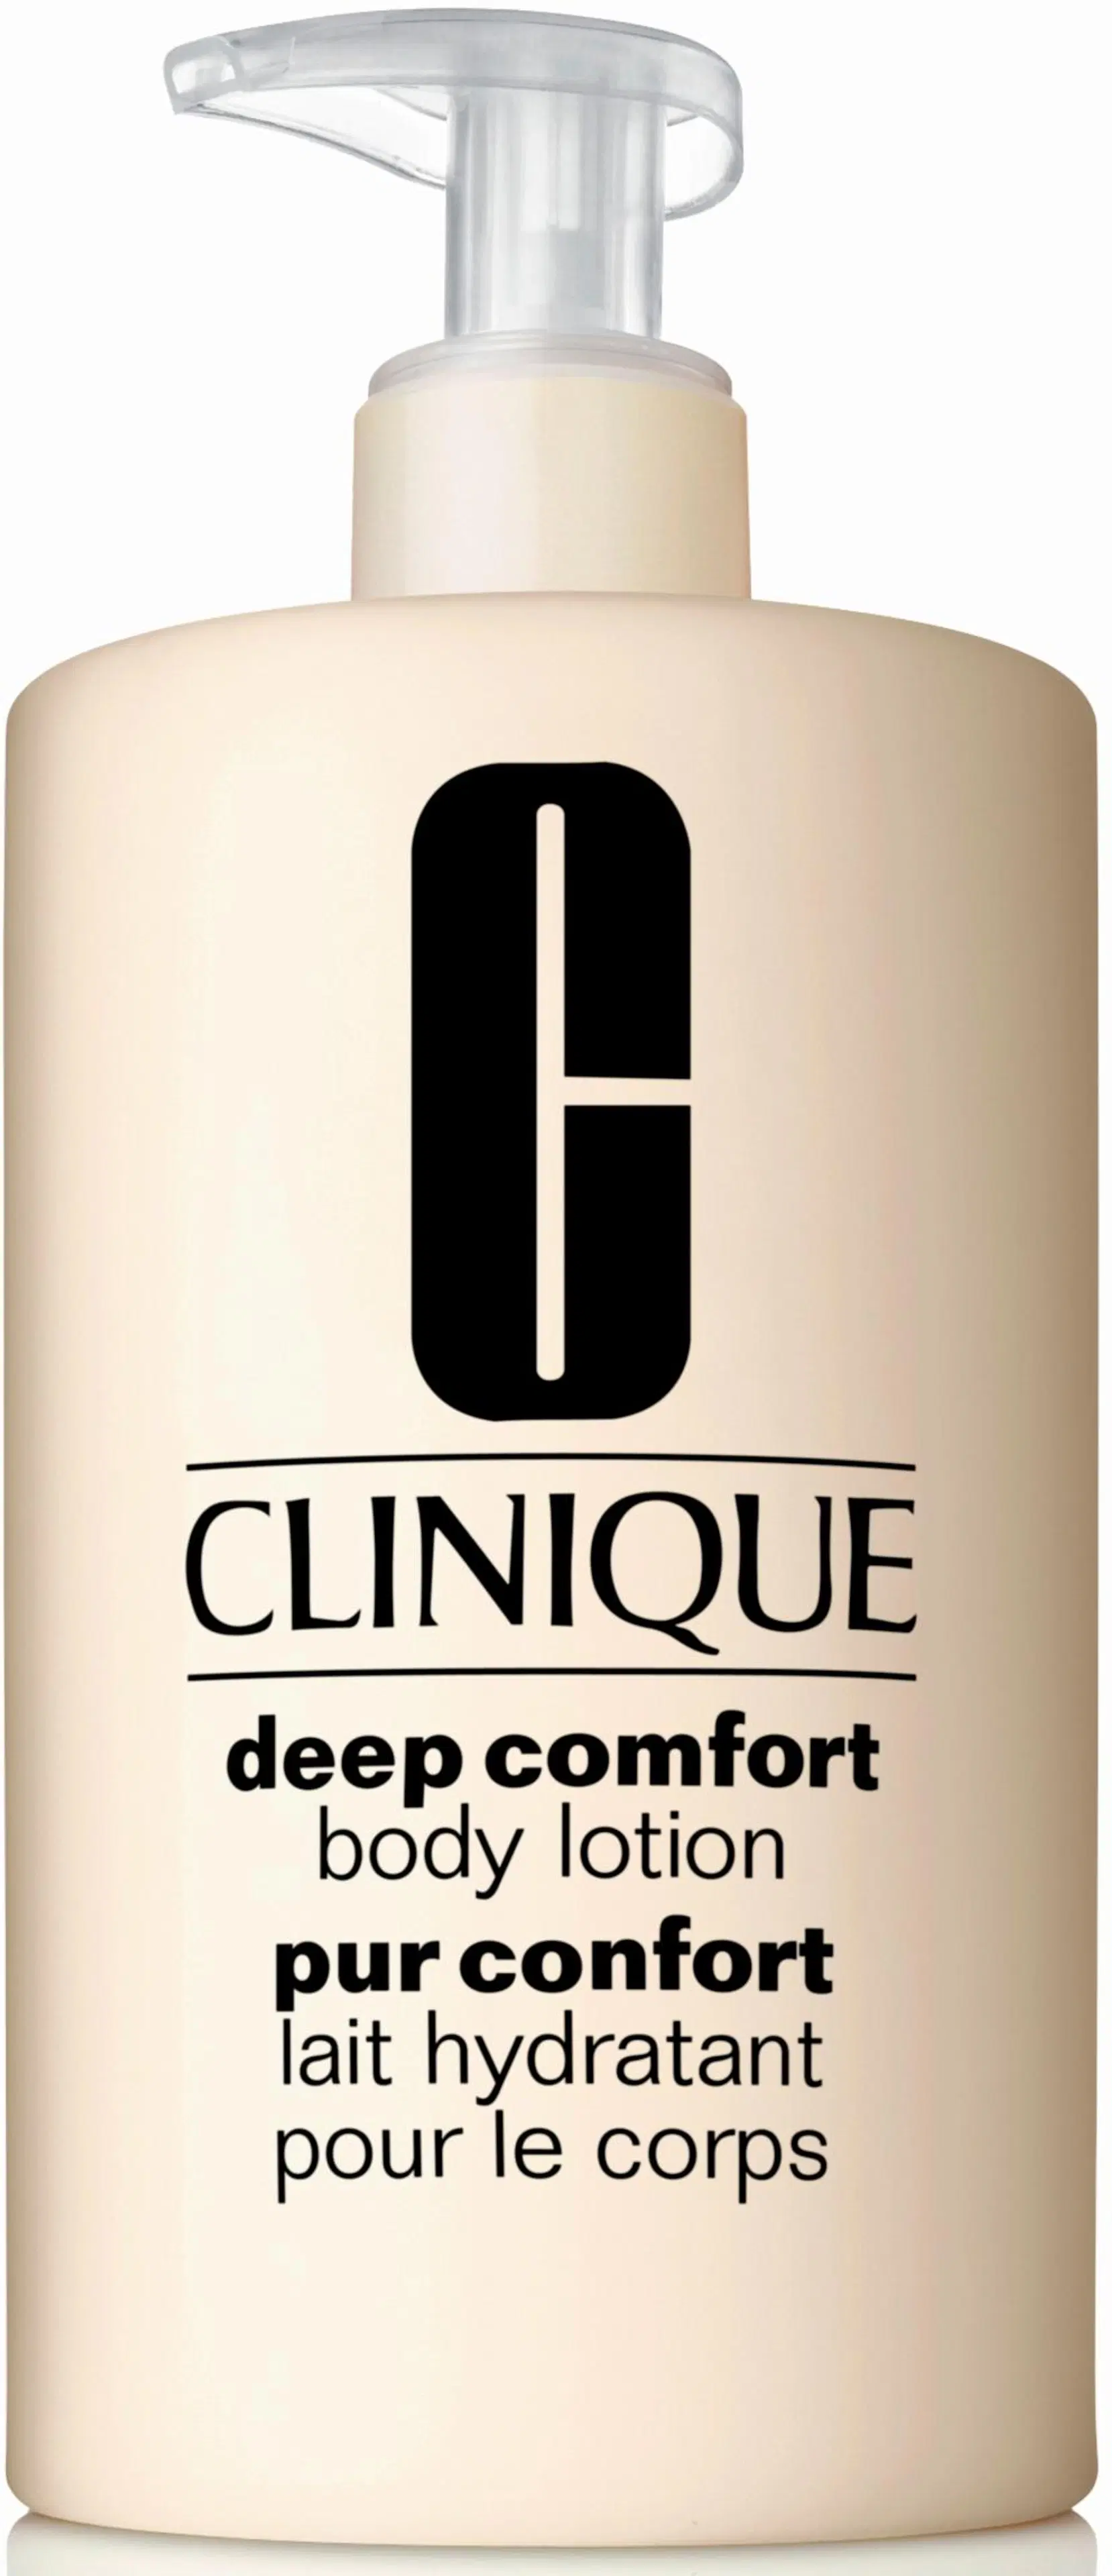 Clinique Deep Comfort Body Lotion vartaloemulsio 400 ml